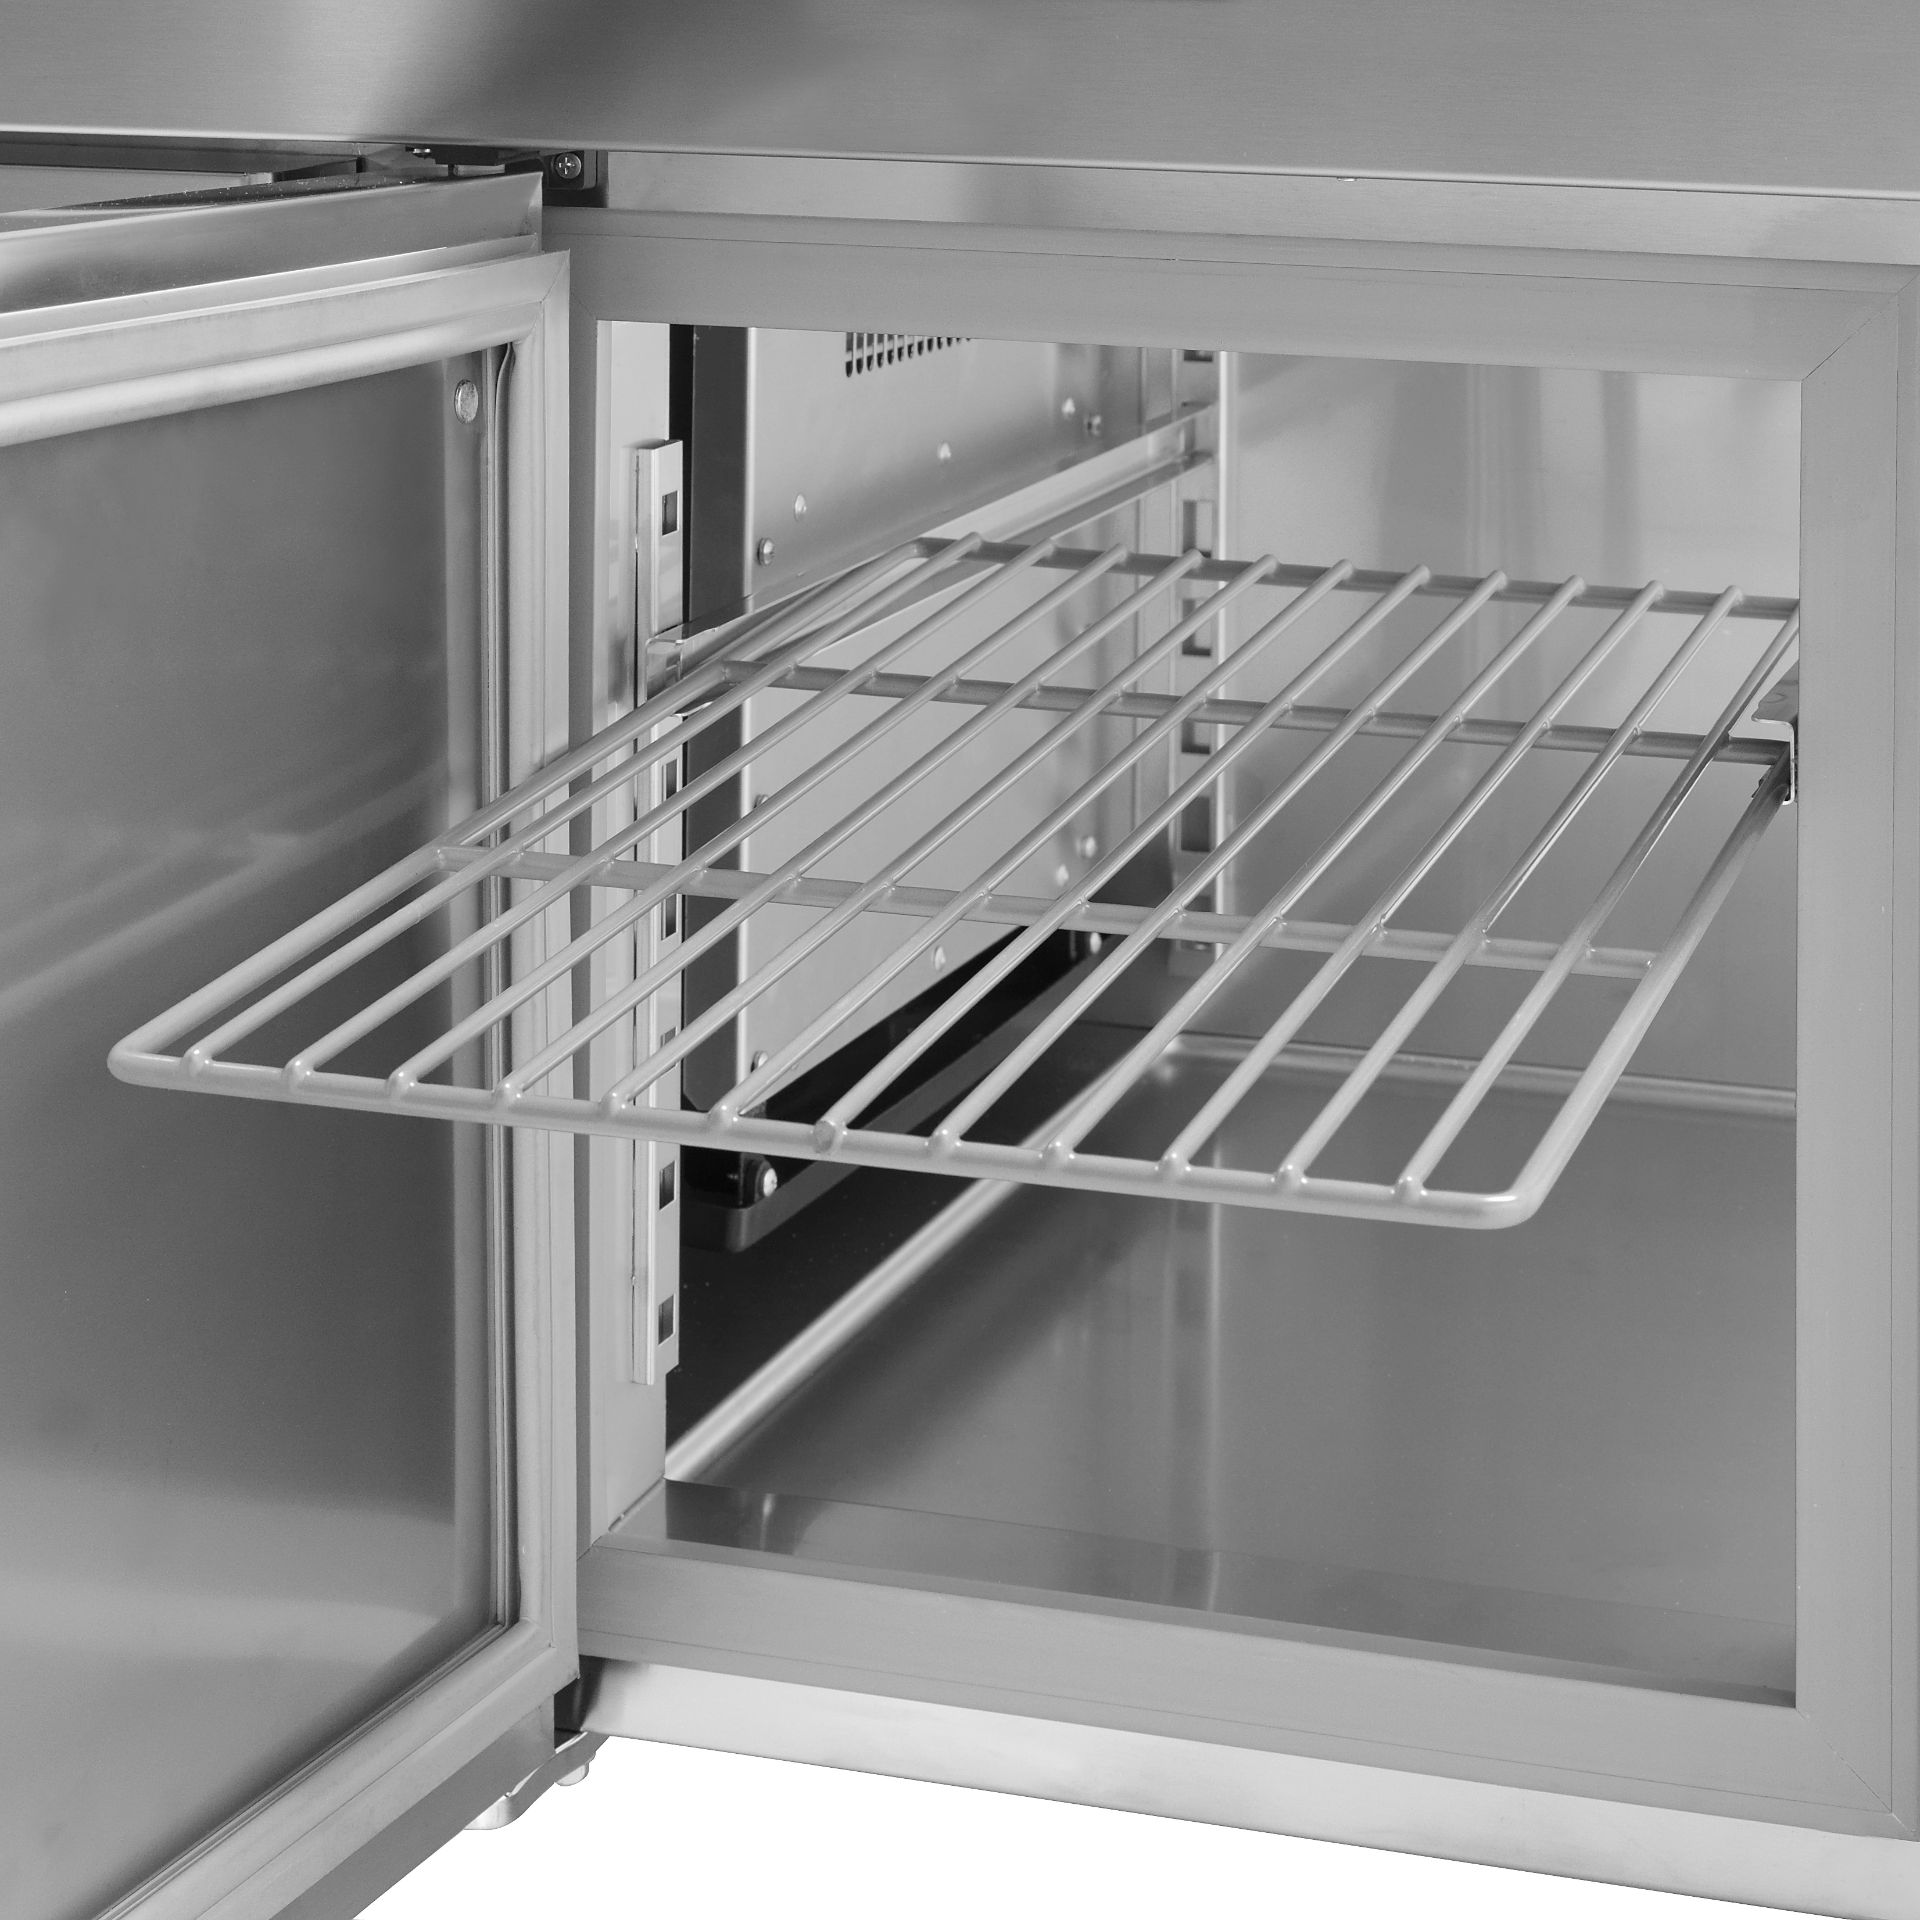 Hoshizaki Refrigerator Counter - Image 3 of 3